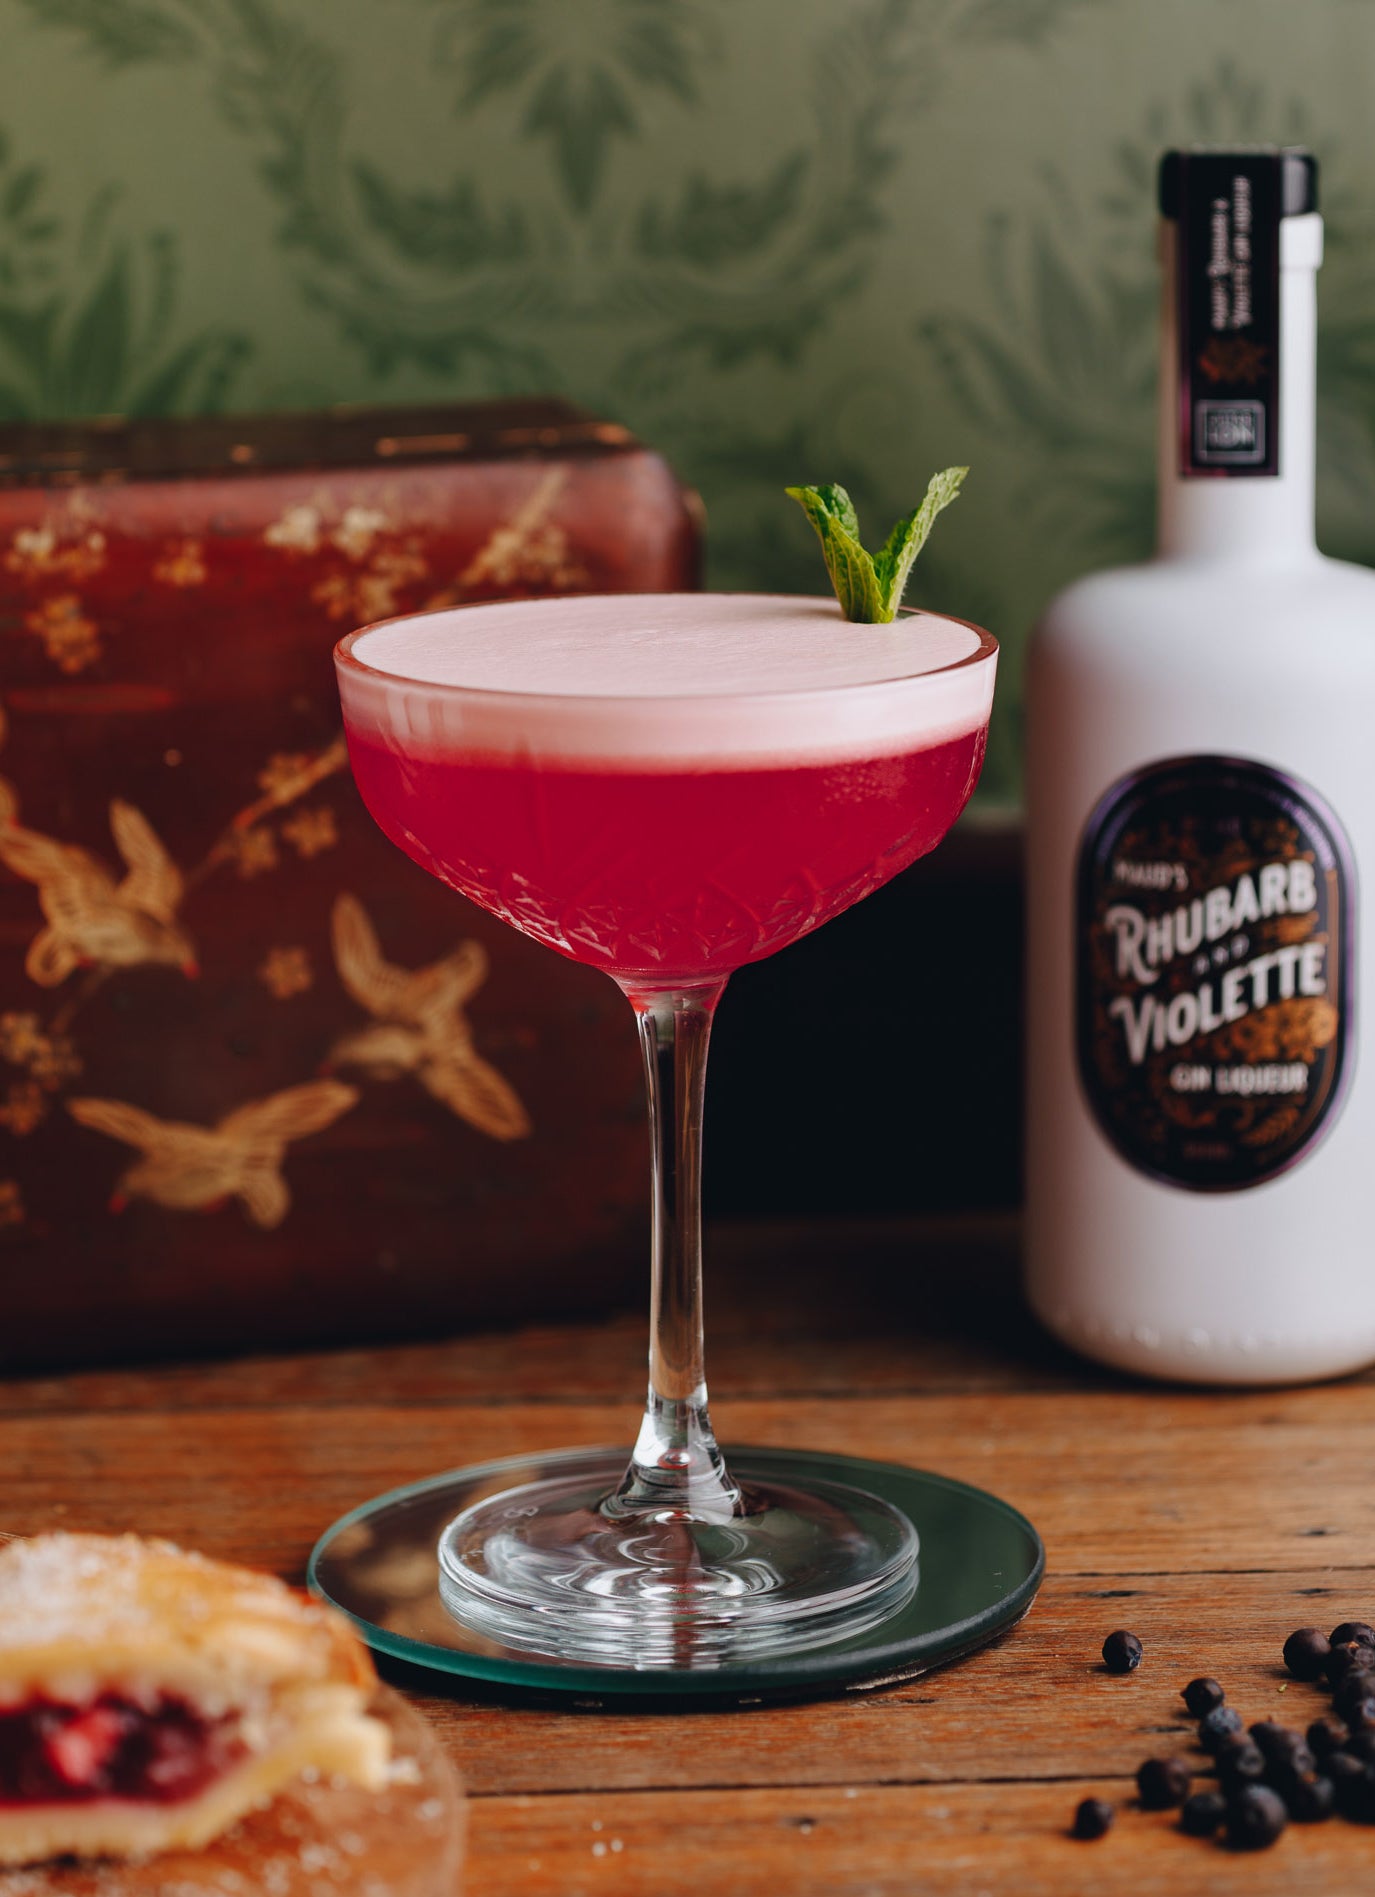 MAUD'S | Rhubarb & Violette Gin Liqueur